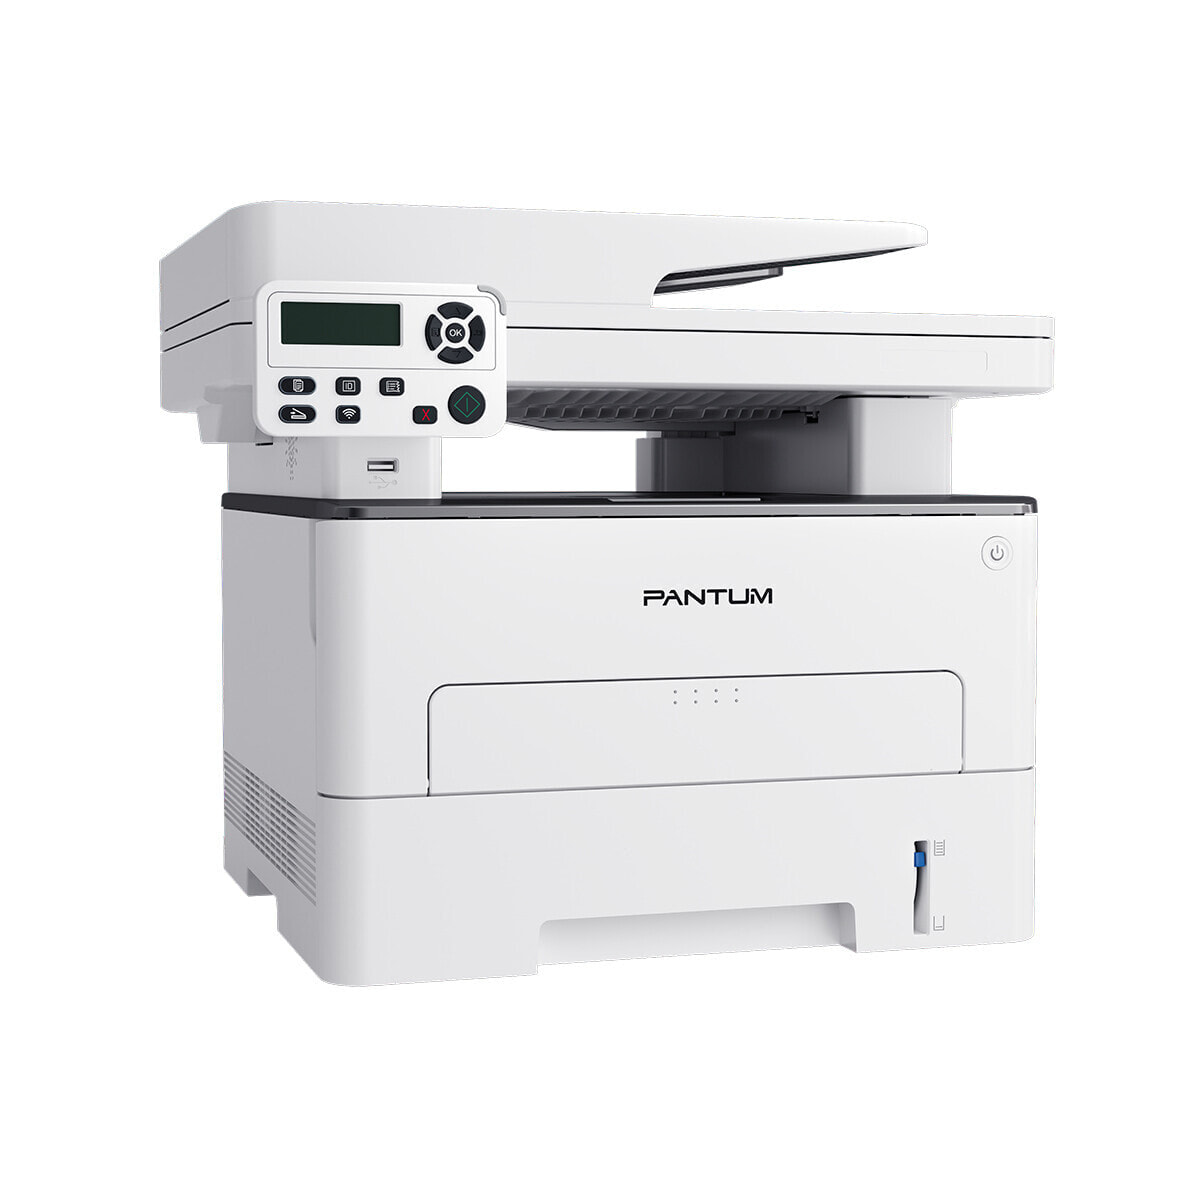 Pantum M7105DW - Laser - Mono printing - Mono copying - Colour scanning - A4 - White